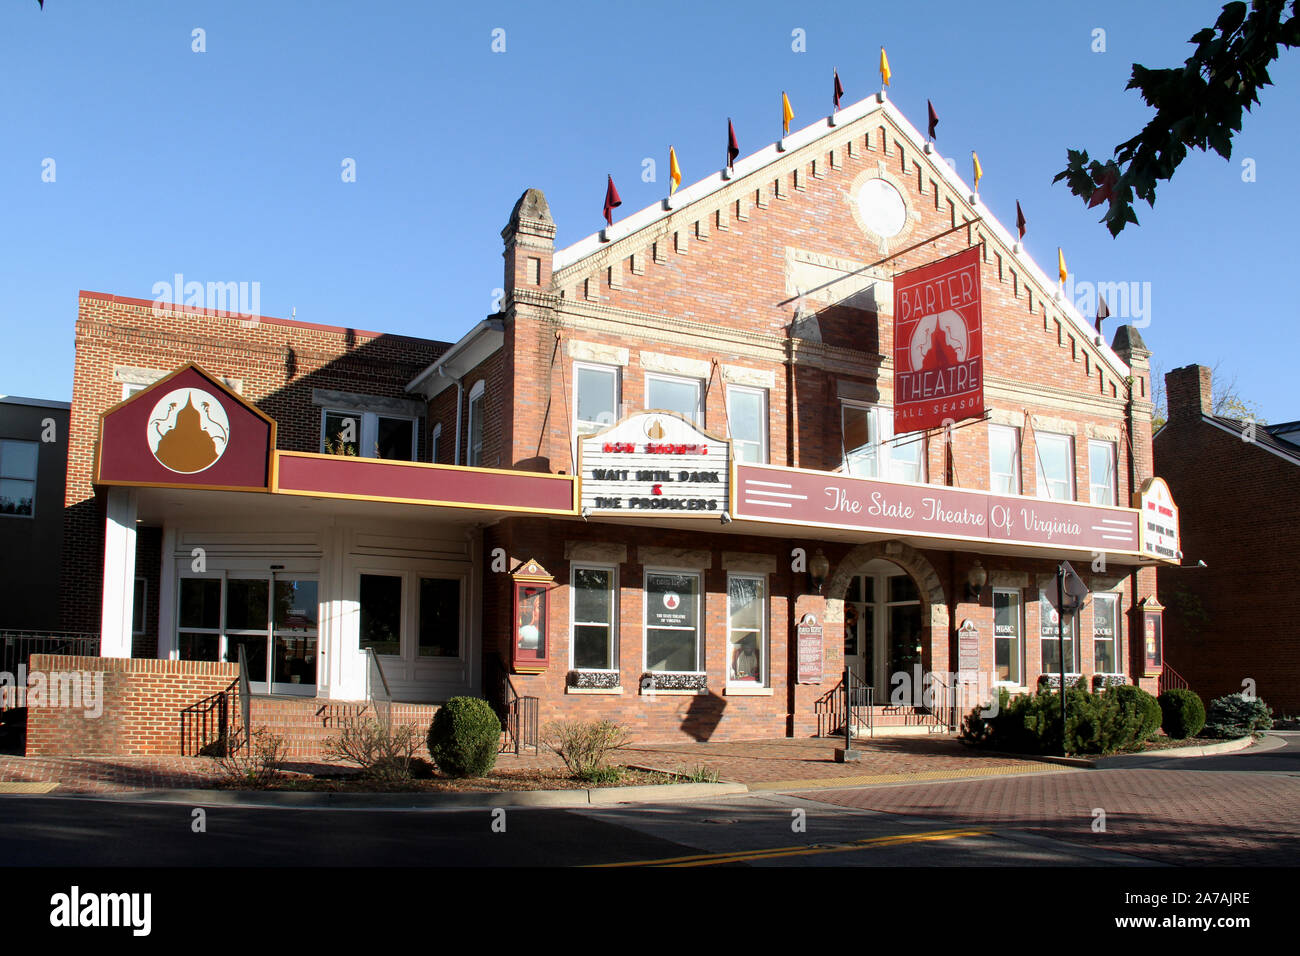 The historical Barter Theatre in downtown Abingdon, VA, USA Stock Photo